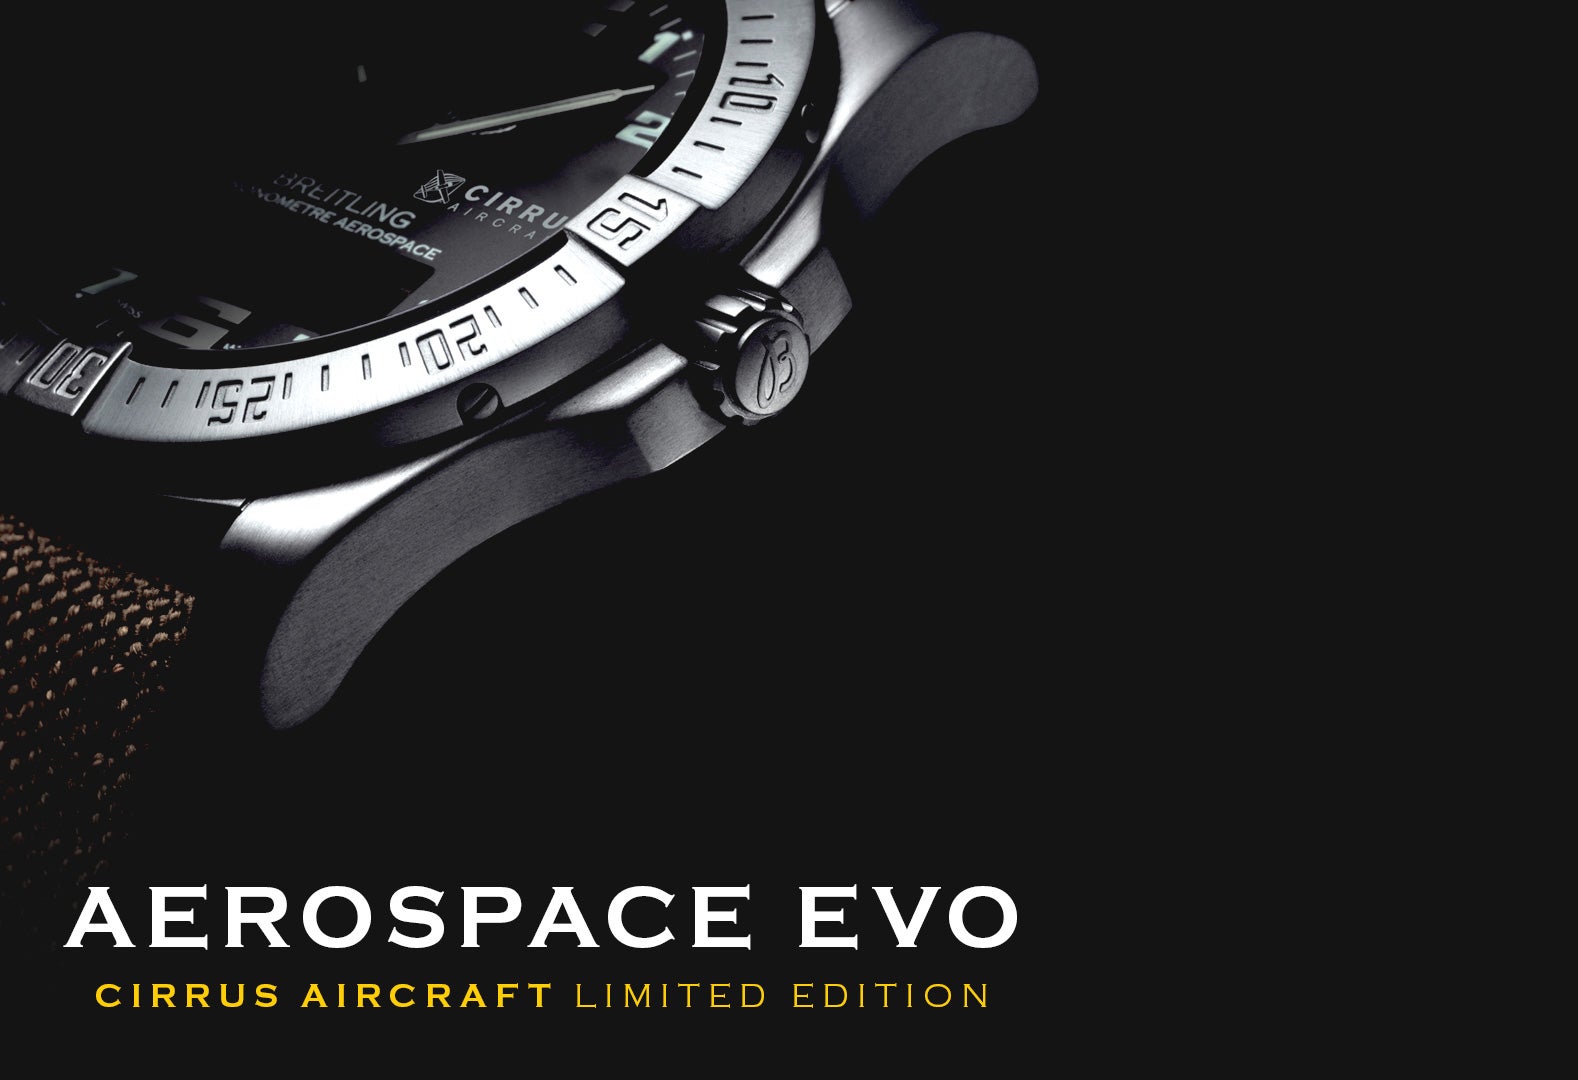 Breitling Cirrus Aerospace Evo